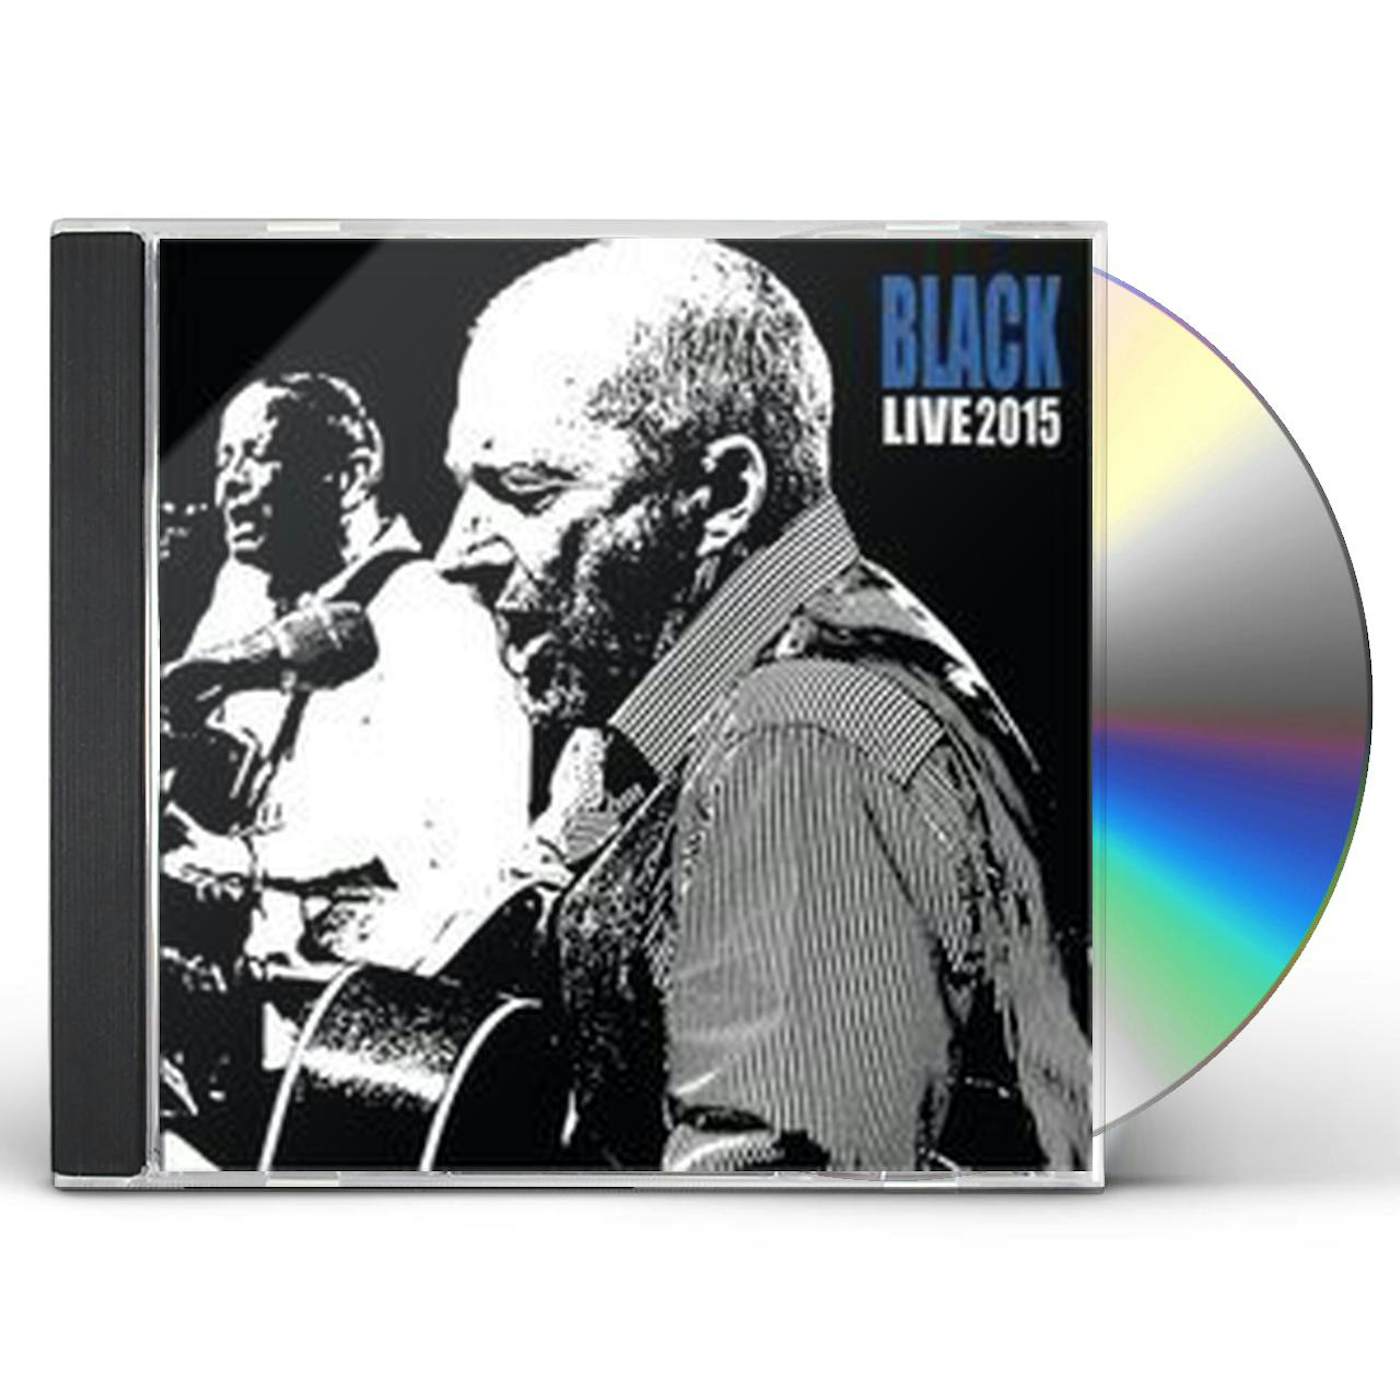 Black LIVE 2015 CD